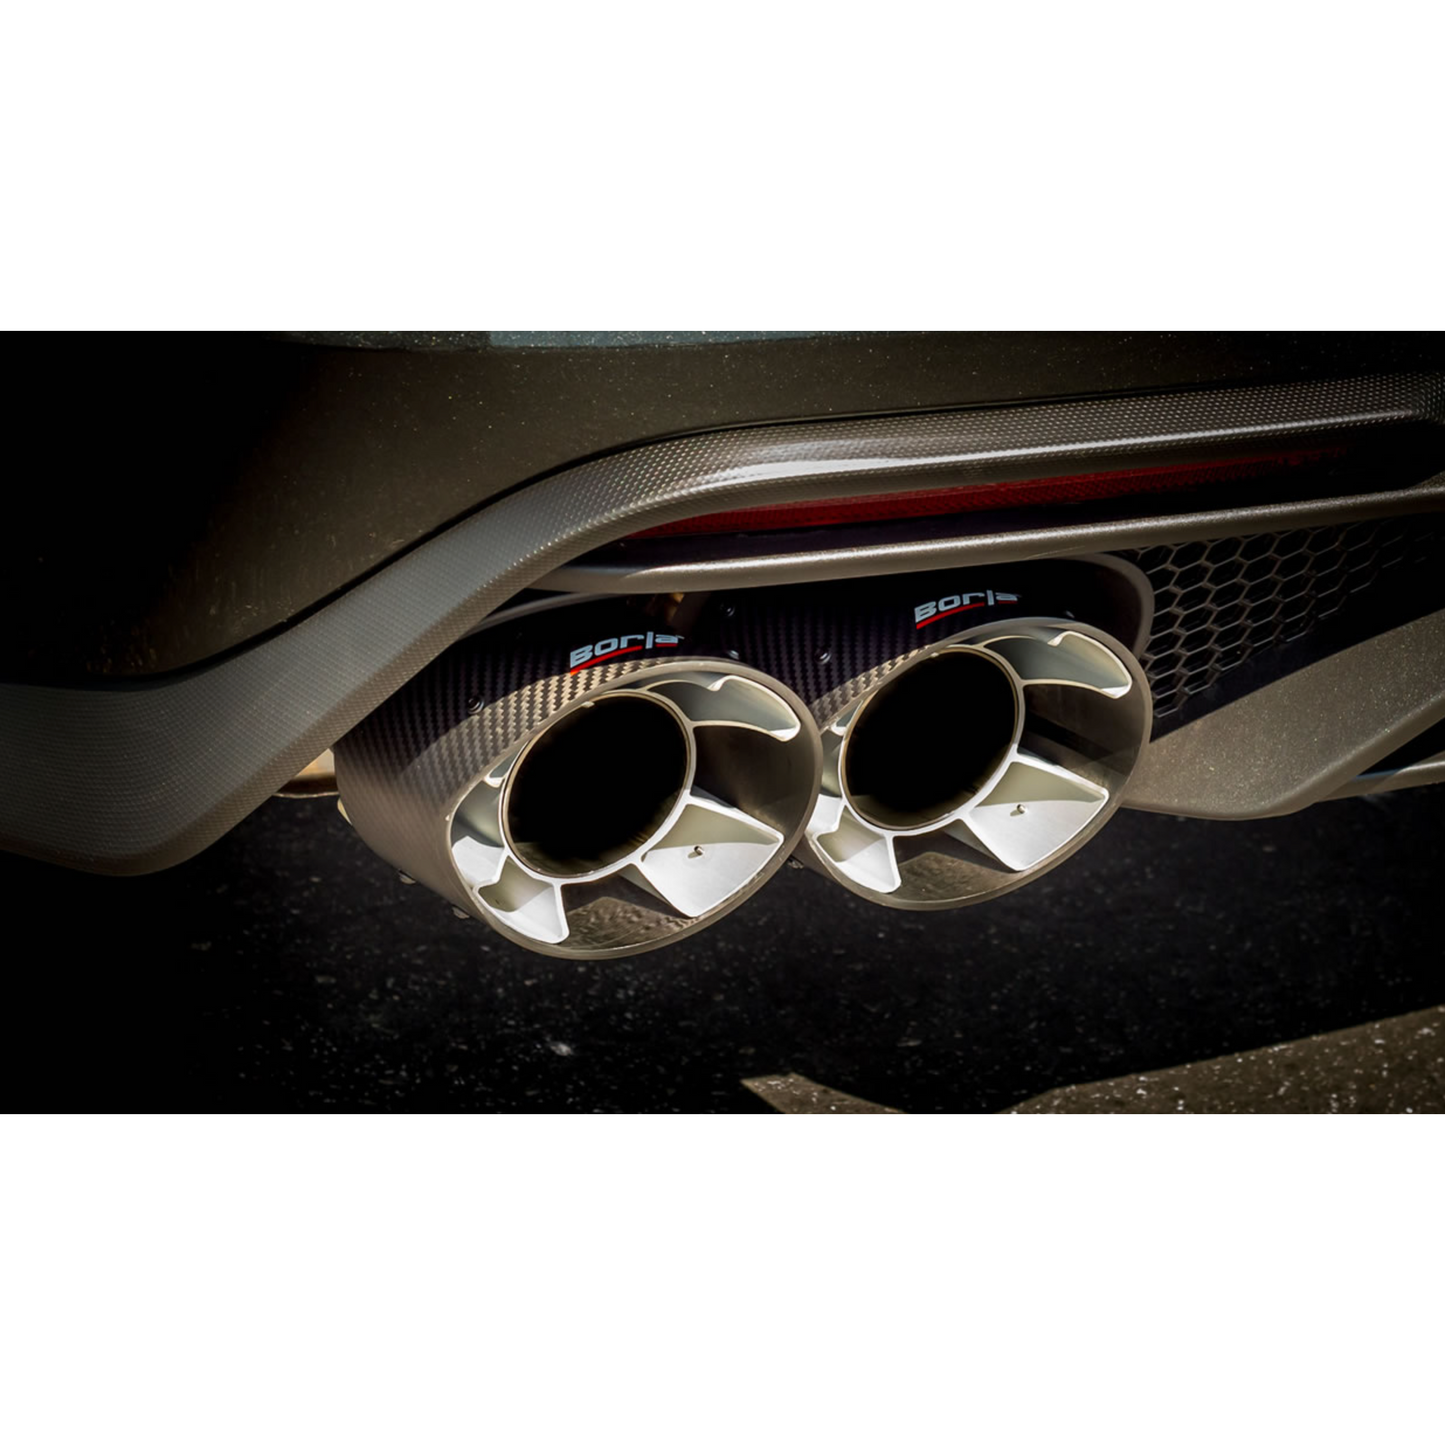 
                  
                    2018+ Kia Stinger 3.3T Borla Carbon Fiber Exhaust Tips
                  
                